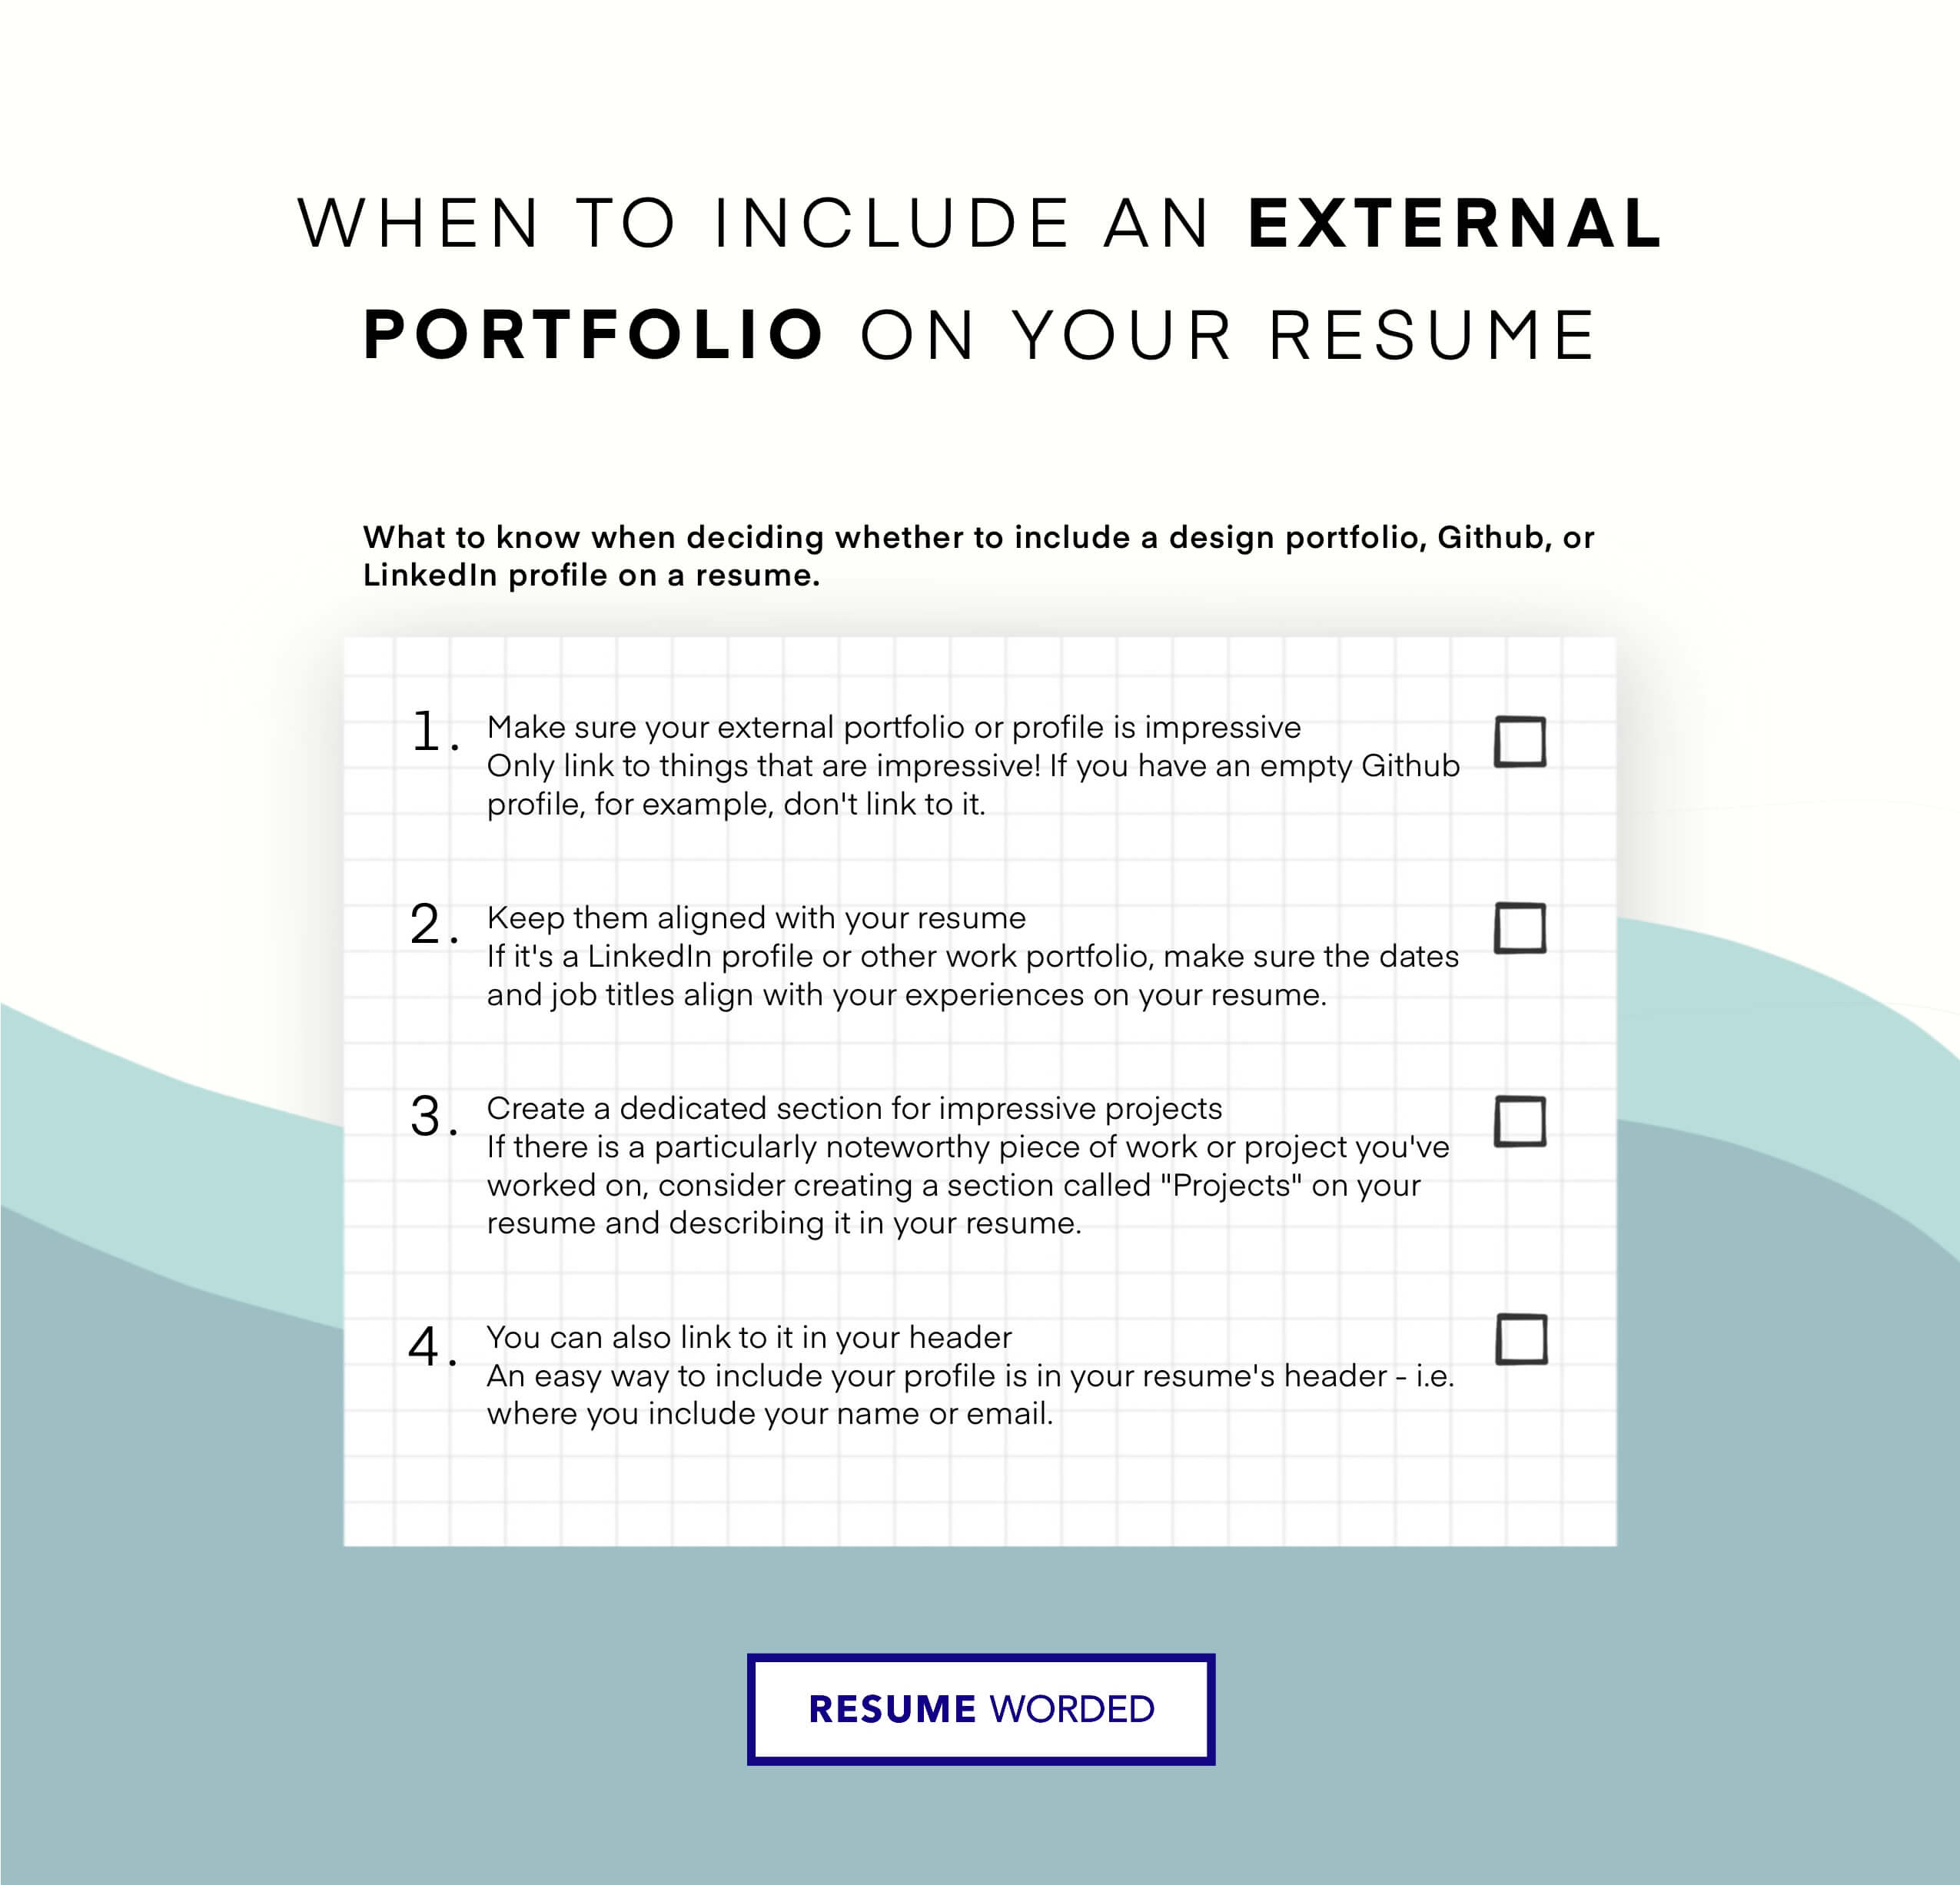 Include any Portfolio links in the Resume Header